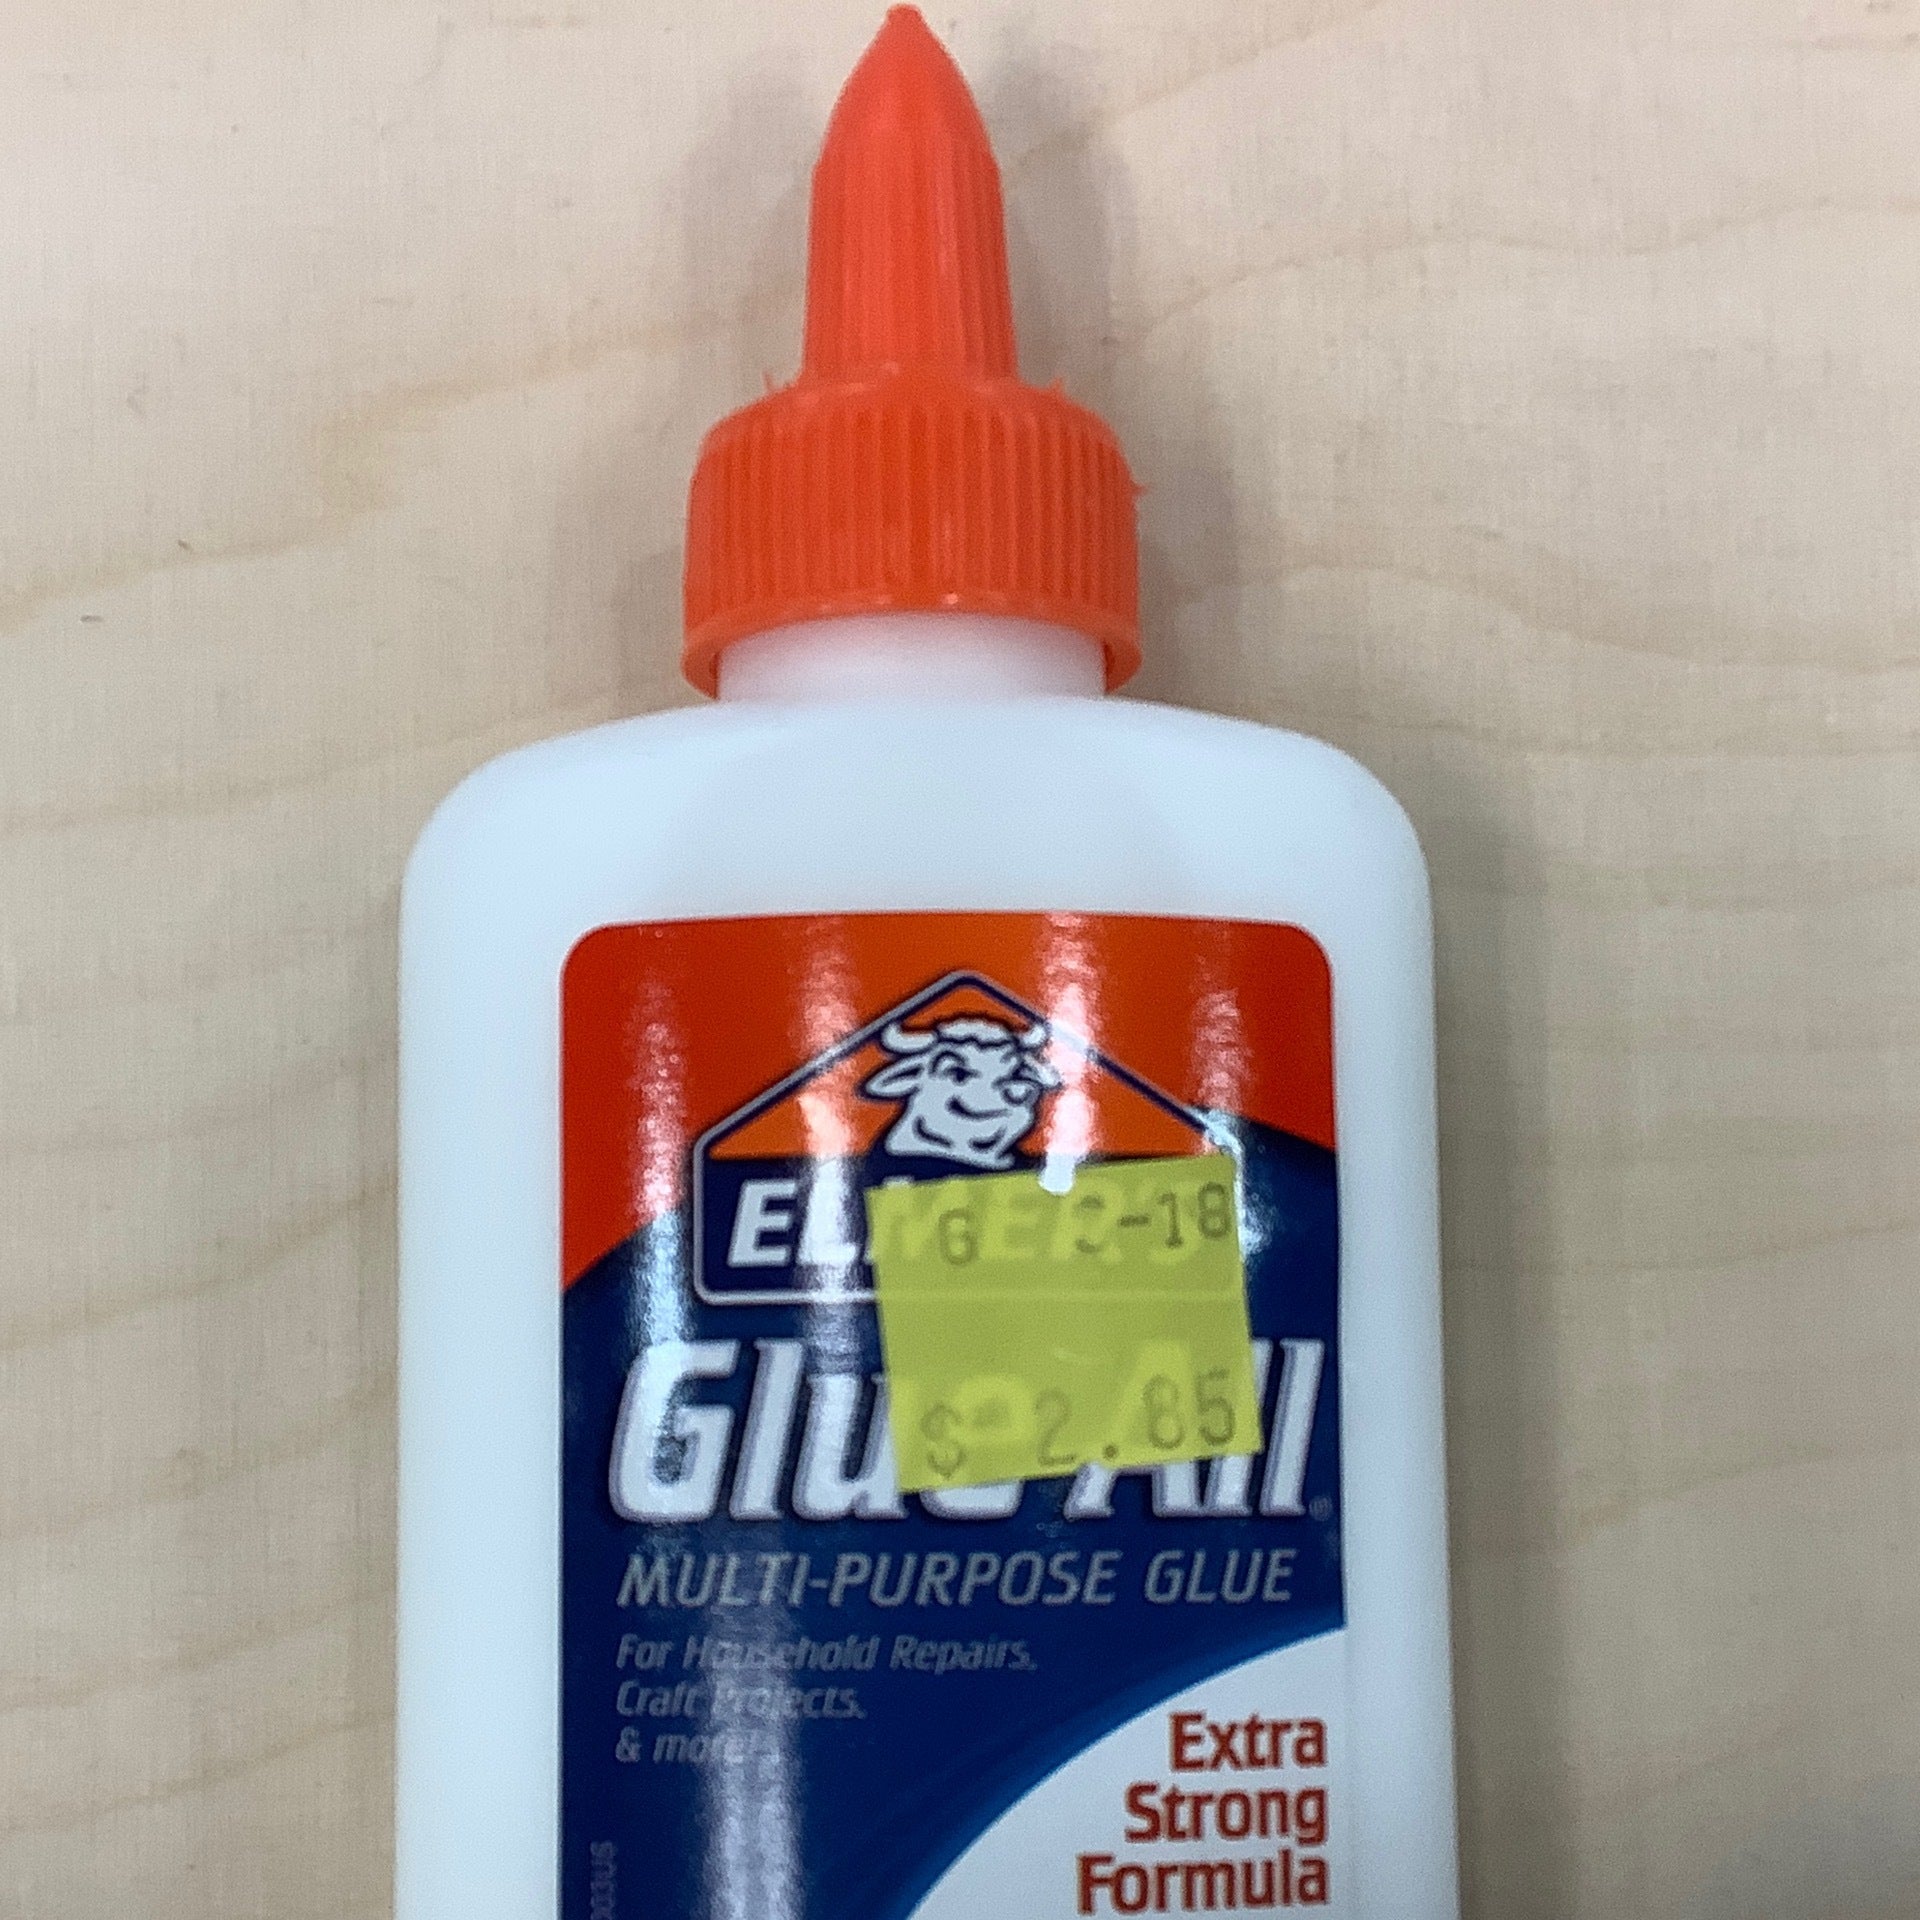 Lot of 2 Elmer's Glue-All Multi-Purpose Liquid Glue, Extra Strong- 4 oz.  Bottles